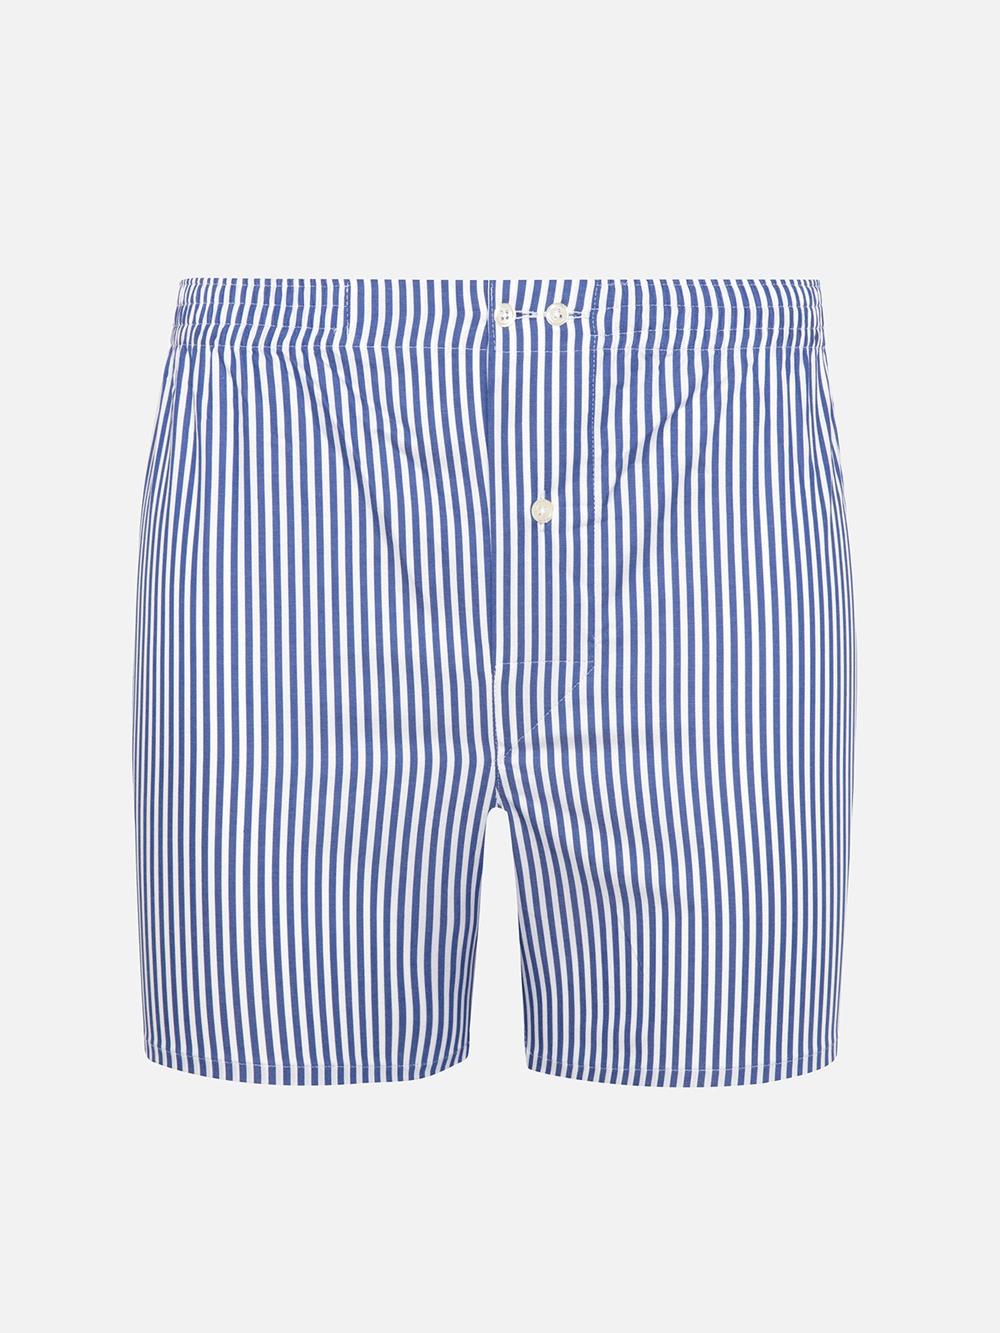 Nick sky blue striped boxer shorts